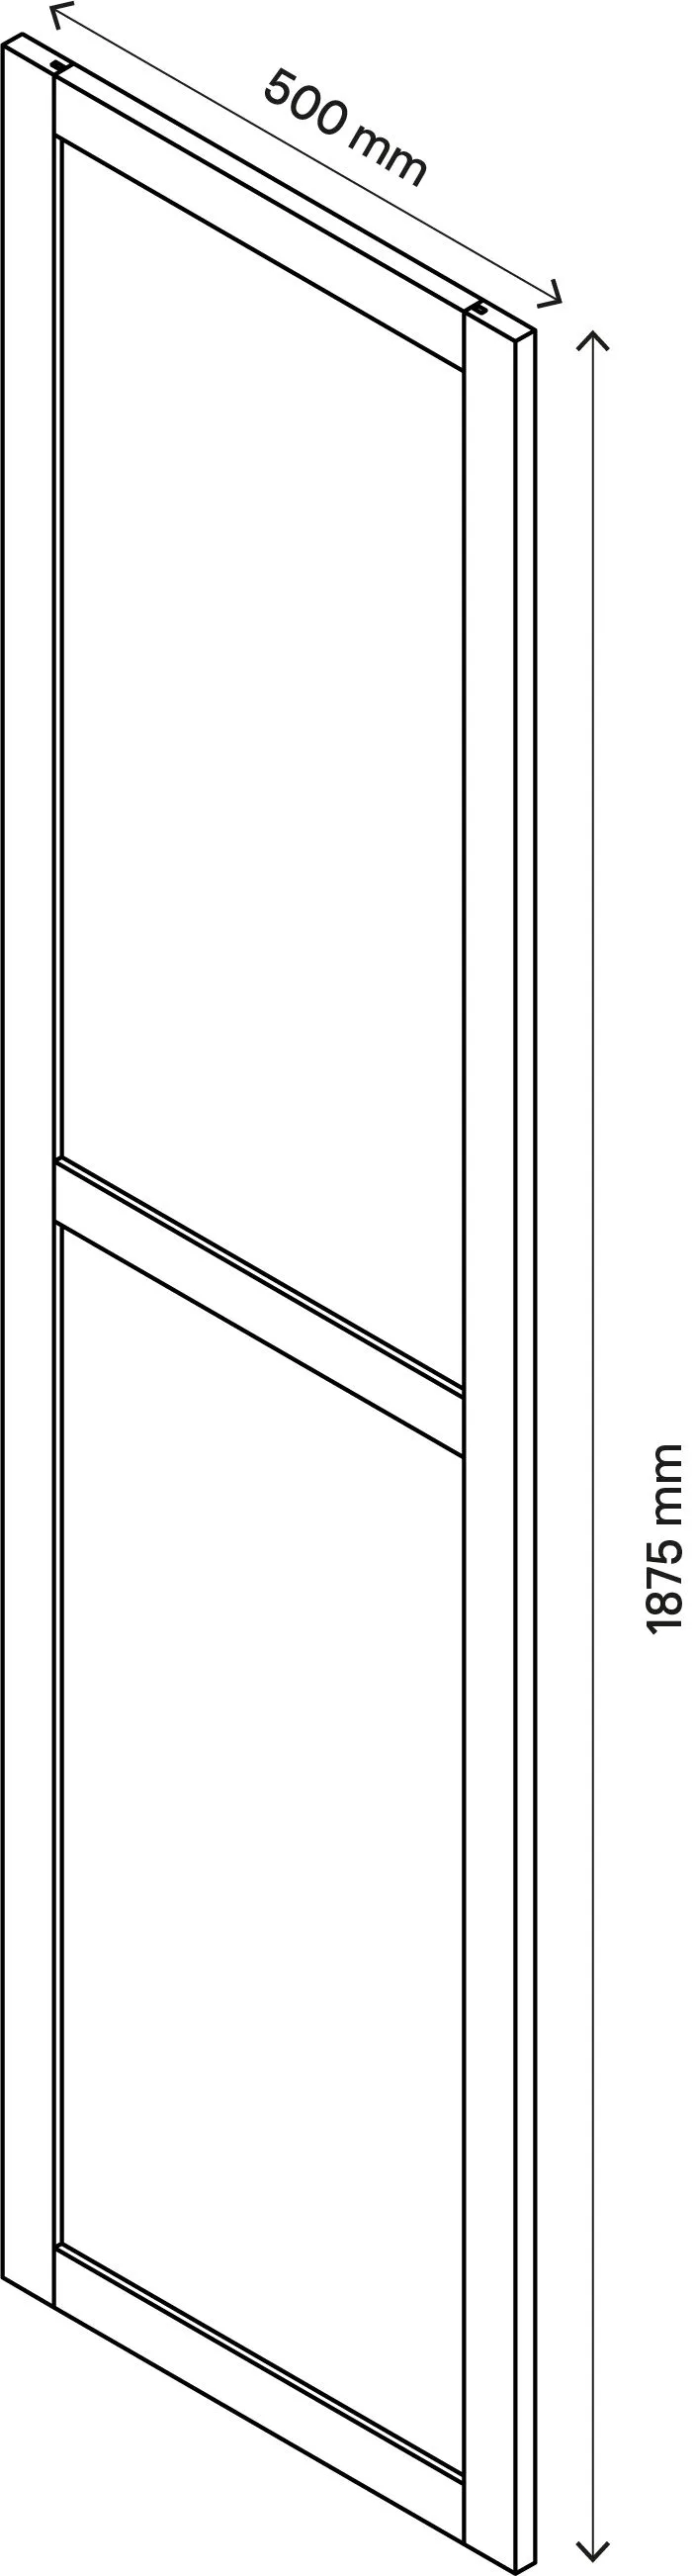 GoodHome Atomia Oak effect Transparent Modular furniture door, (H) 1872mm (W) 497mm